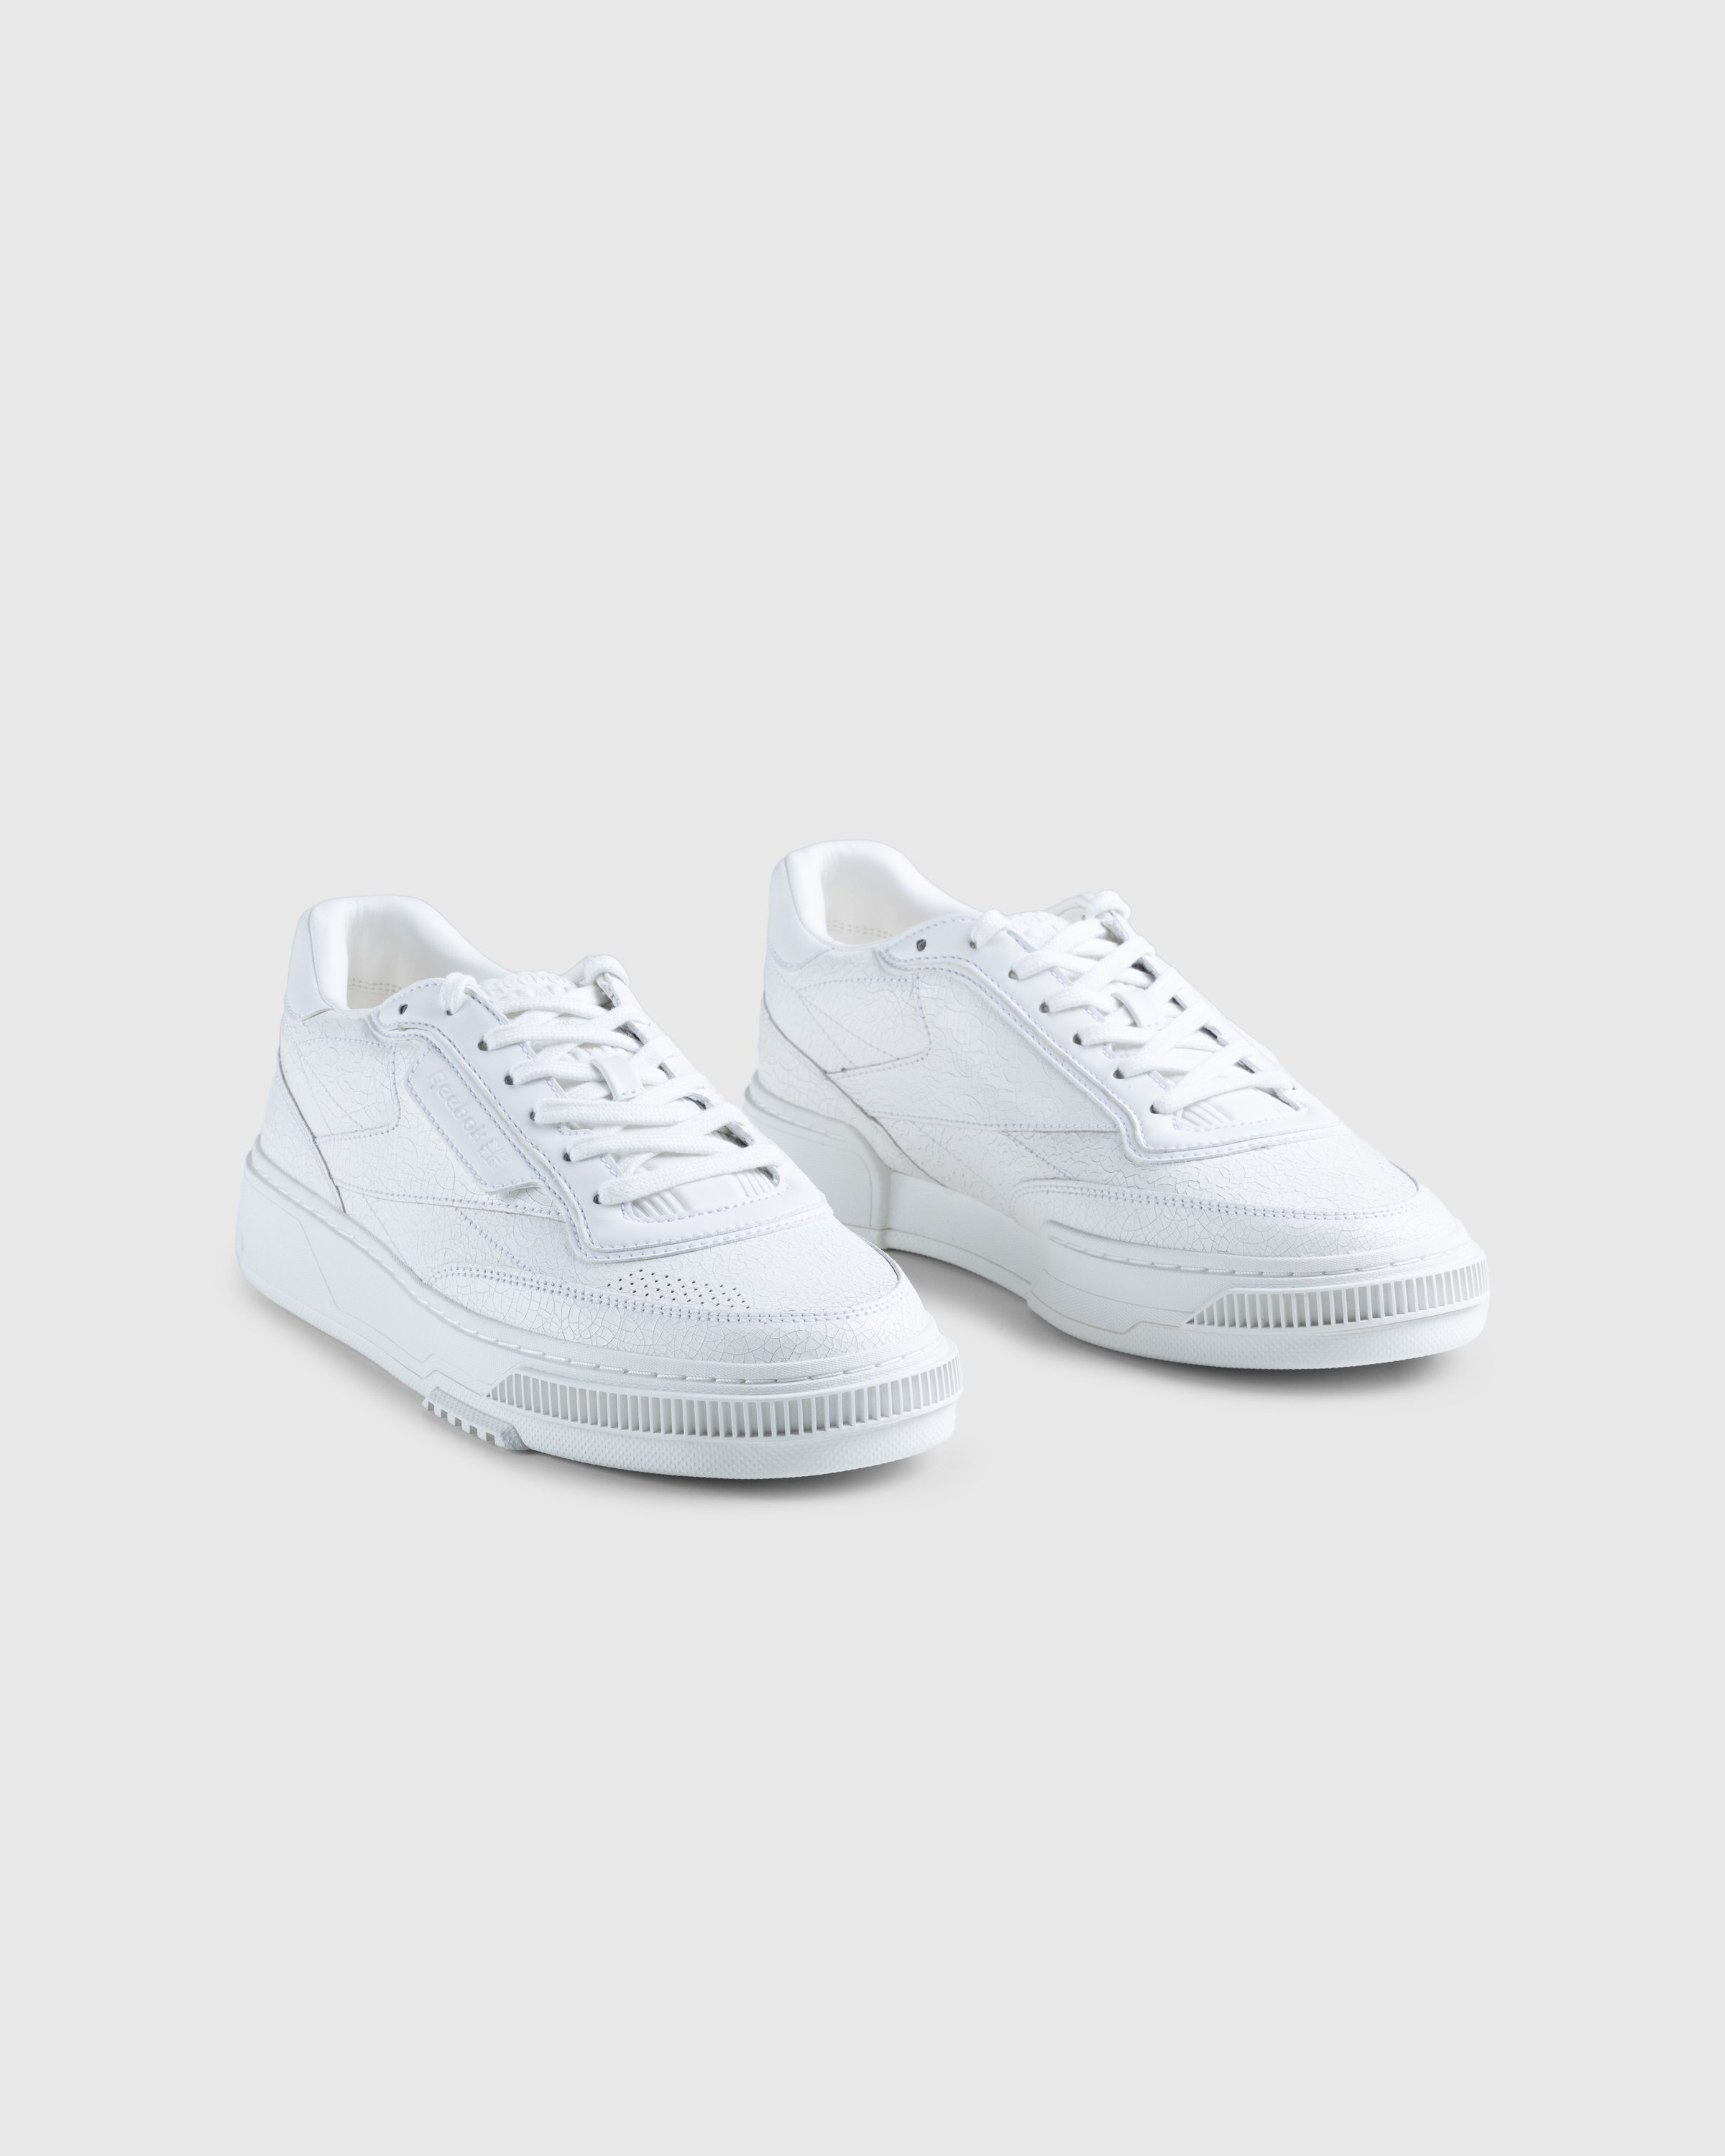 Reebok - Club C Ltd Cracked White White - Footwear - White - Image 3